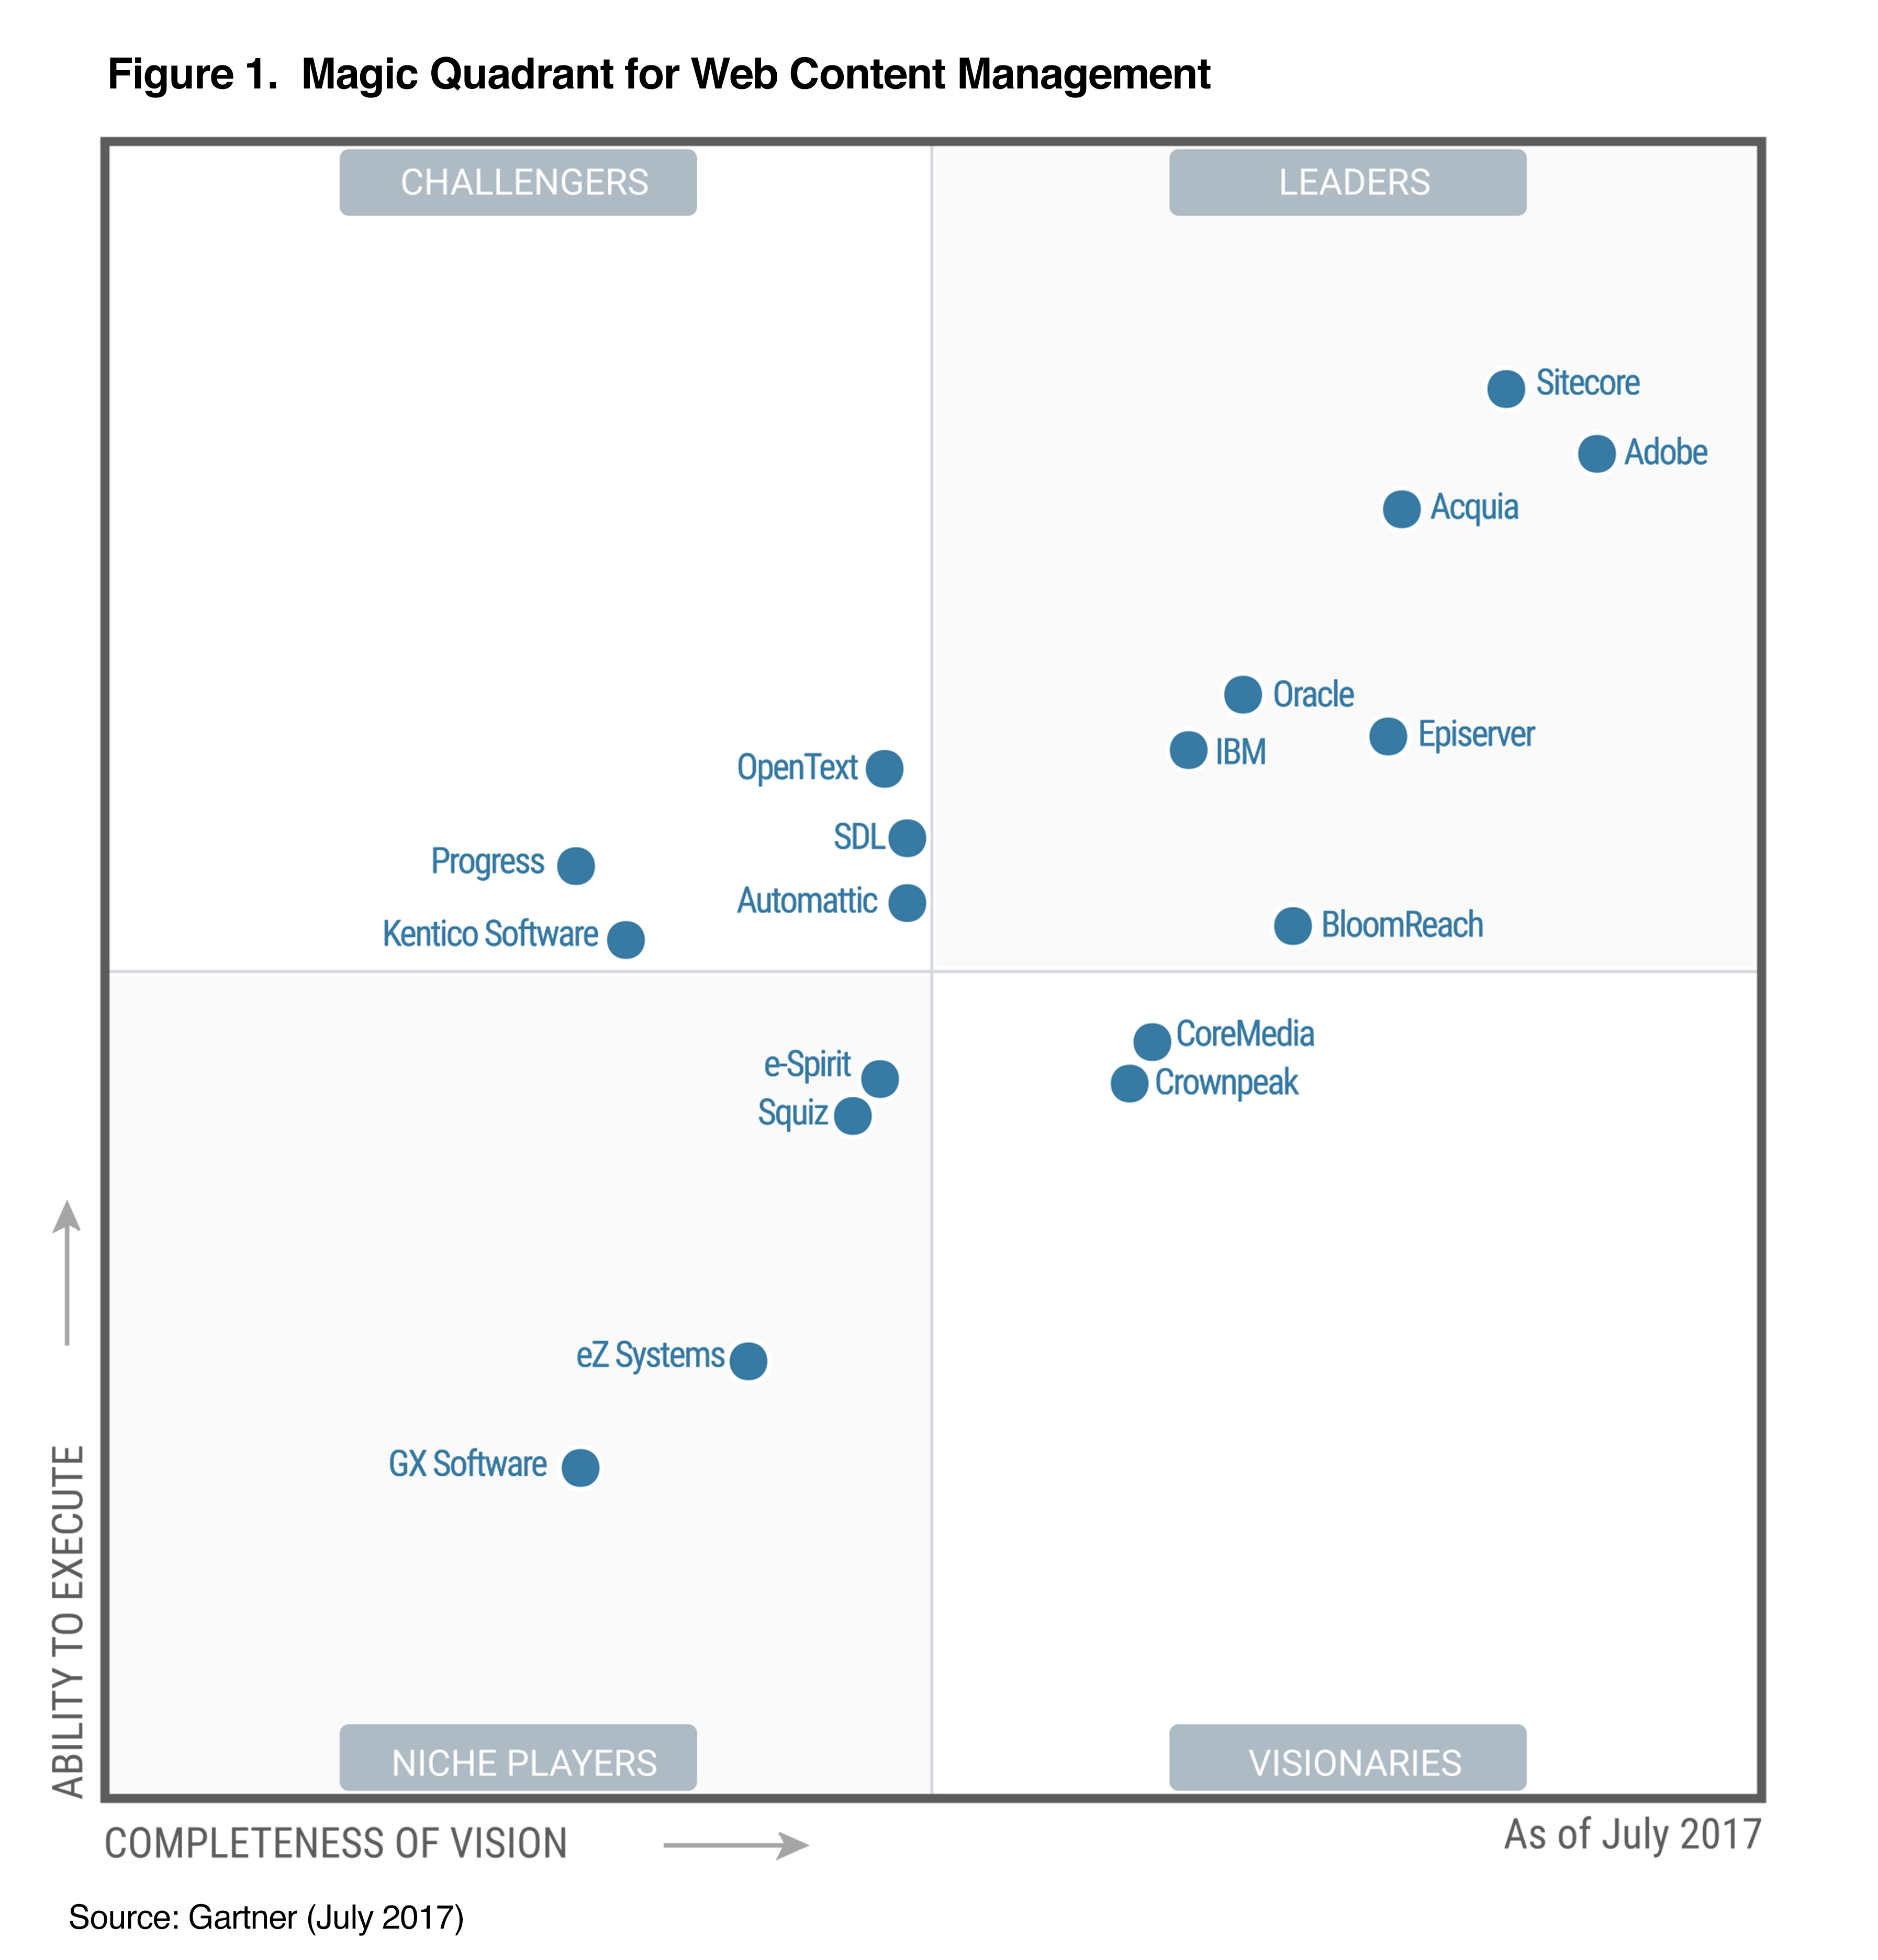 acquia-a-leader-in-2017-gartner-magic-quadrant-for-web-content-management-dries-buytaert